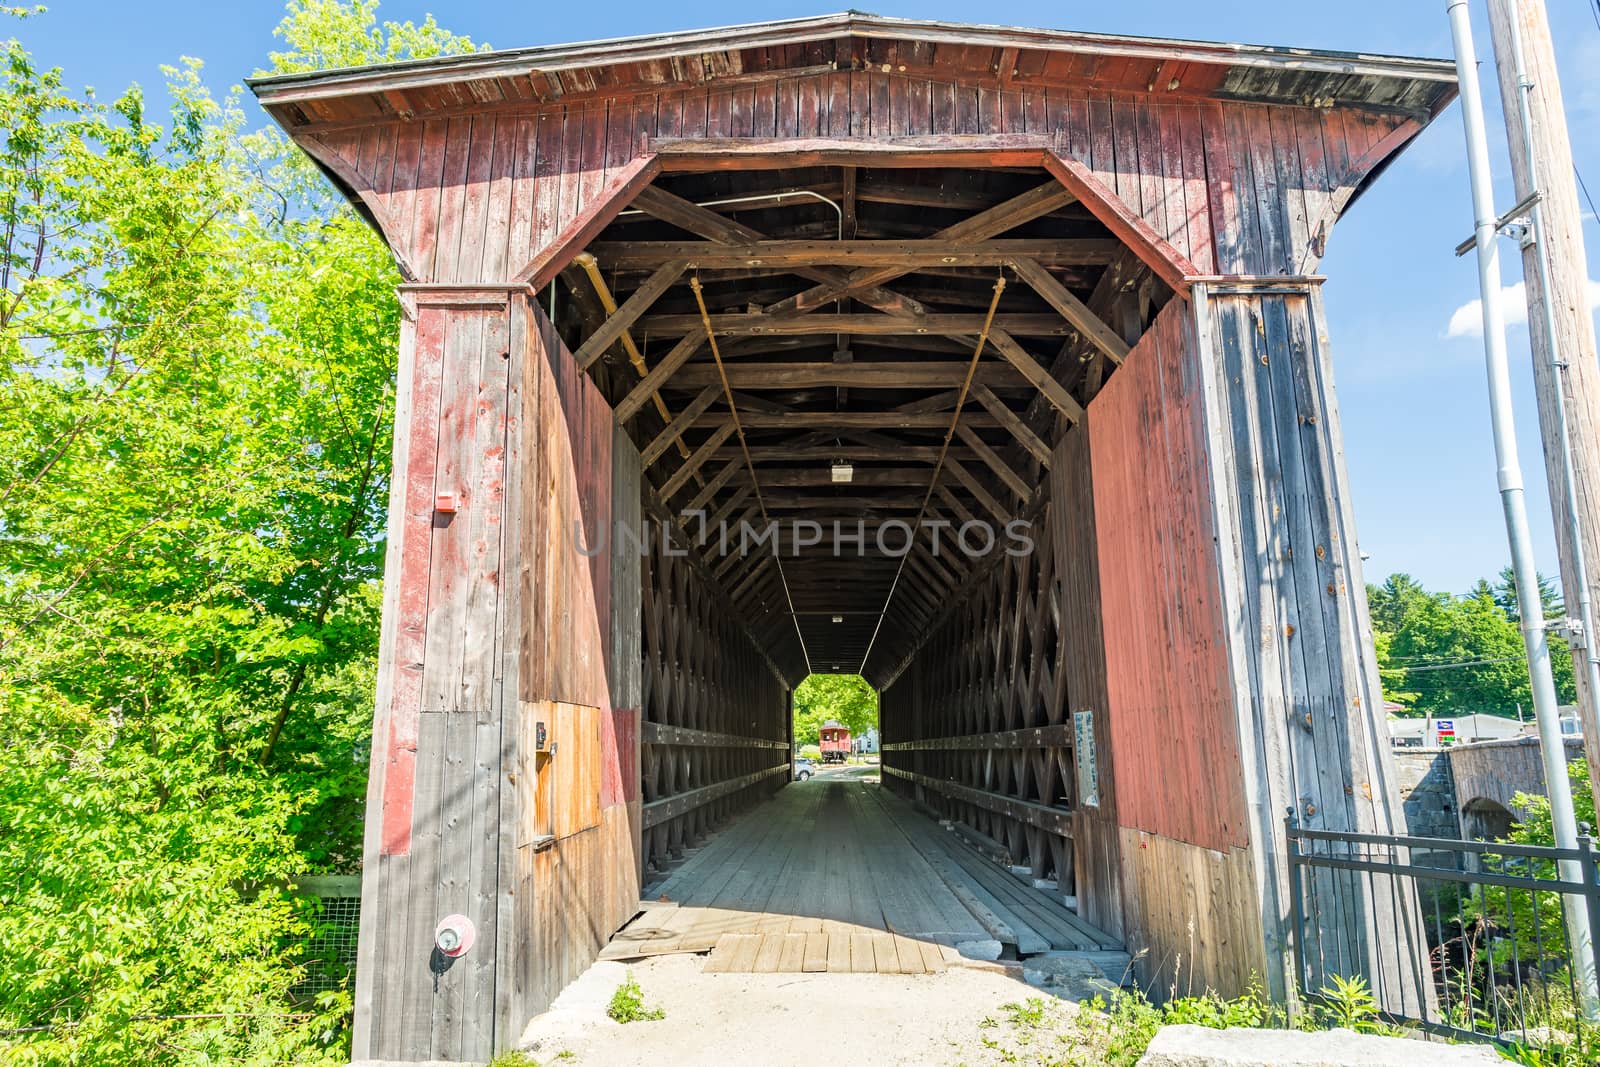 Contoocook Railroad Bridge by adifferentbrian